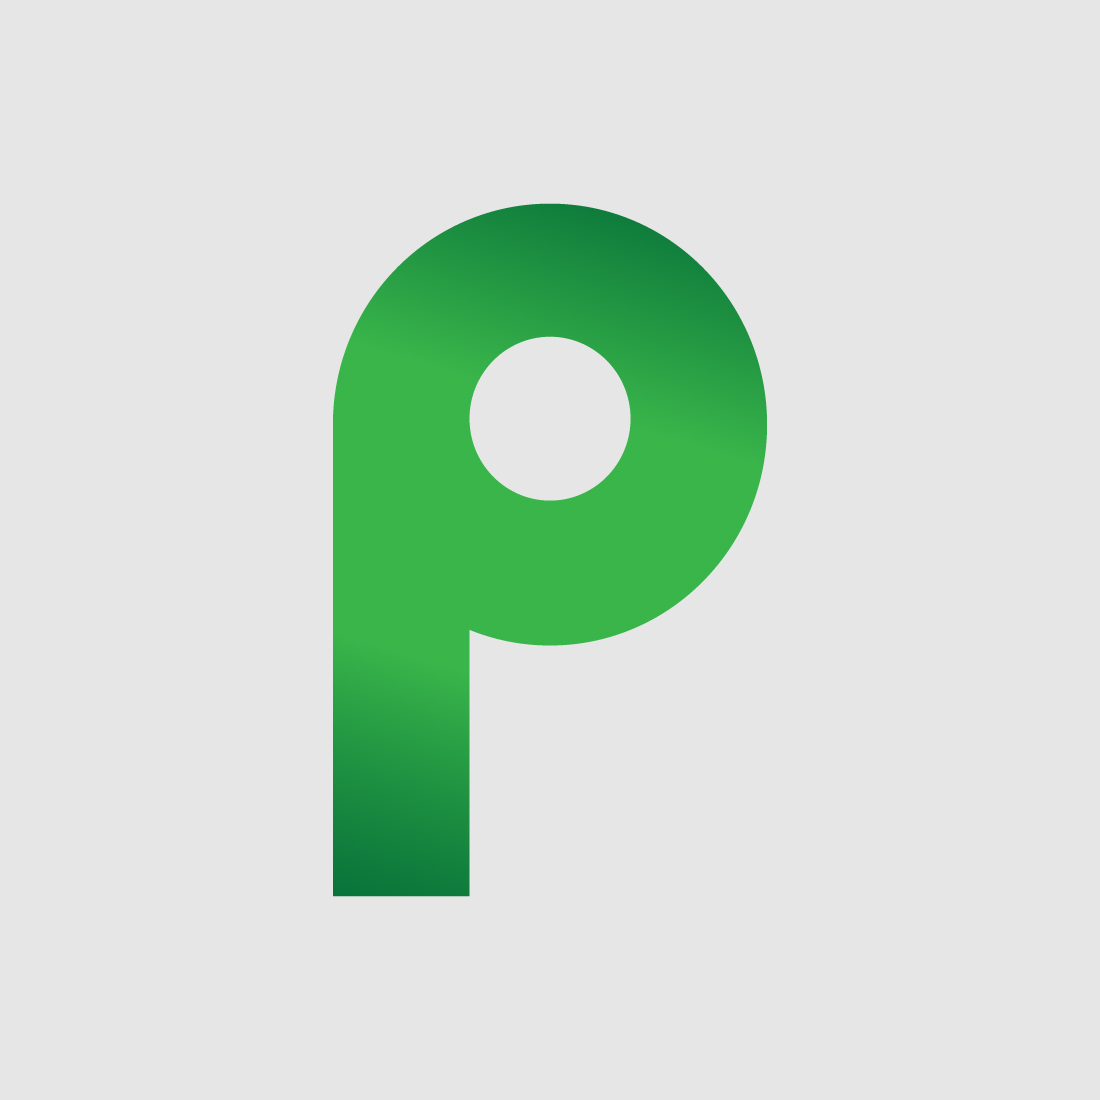 P Logo preview image.